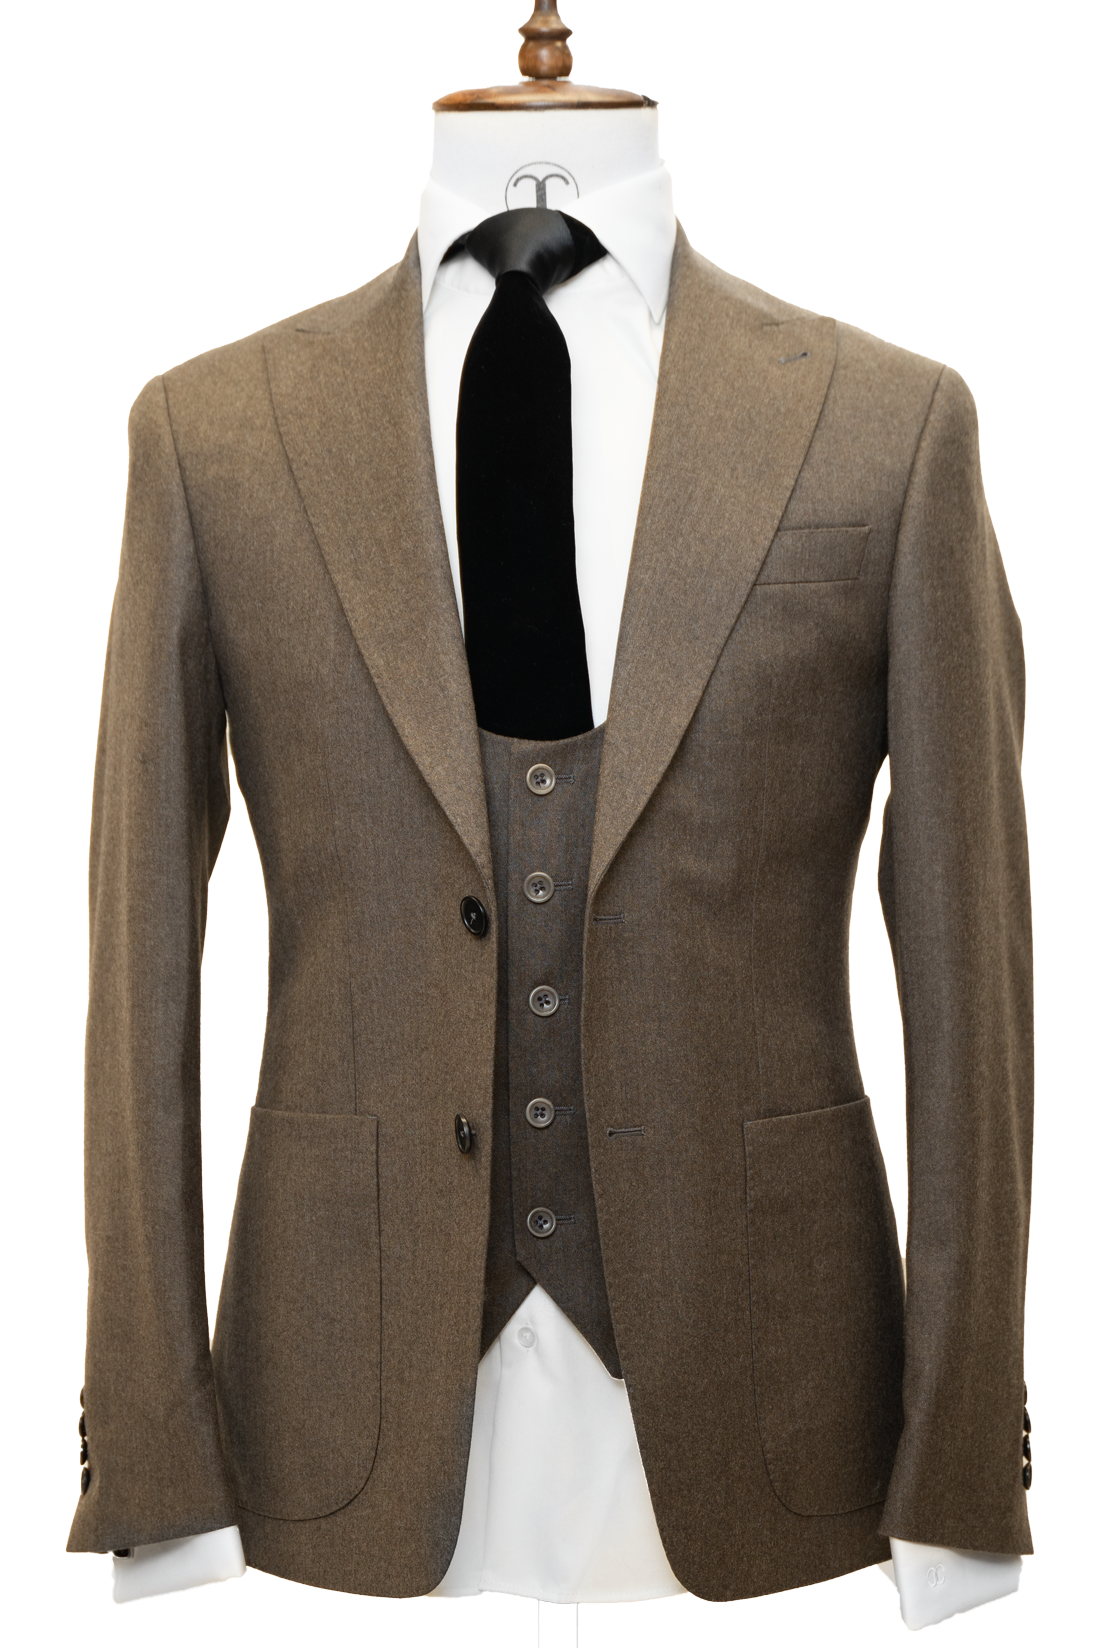 Zignone - Dark Brown Cashmere 3-Piece Fit Slim Fit Suit with Patch Pockets